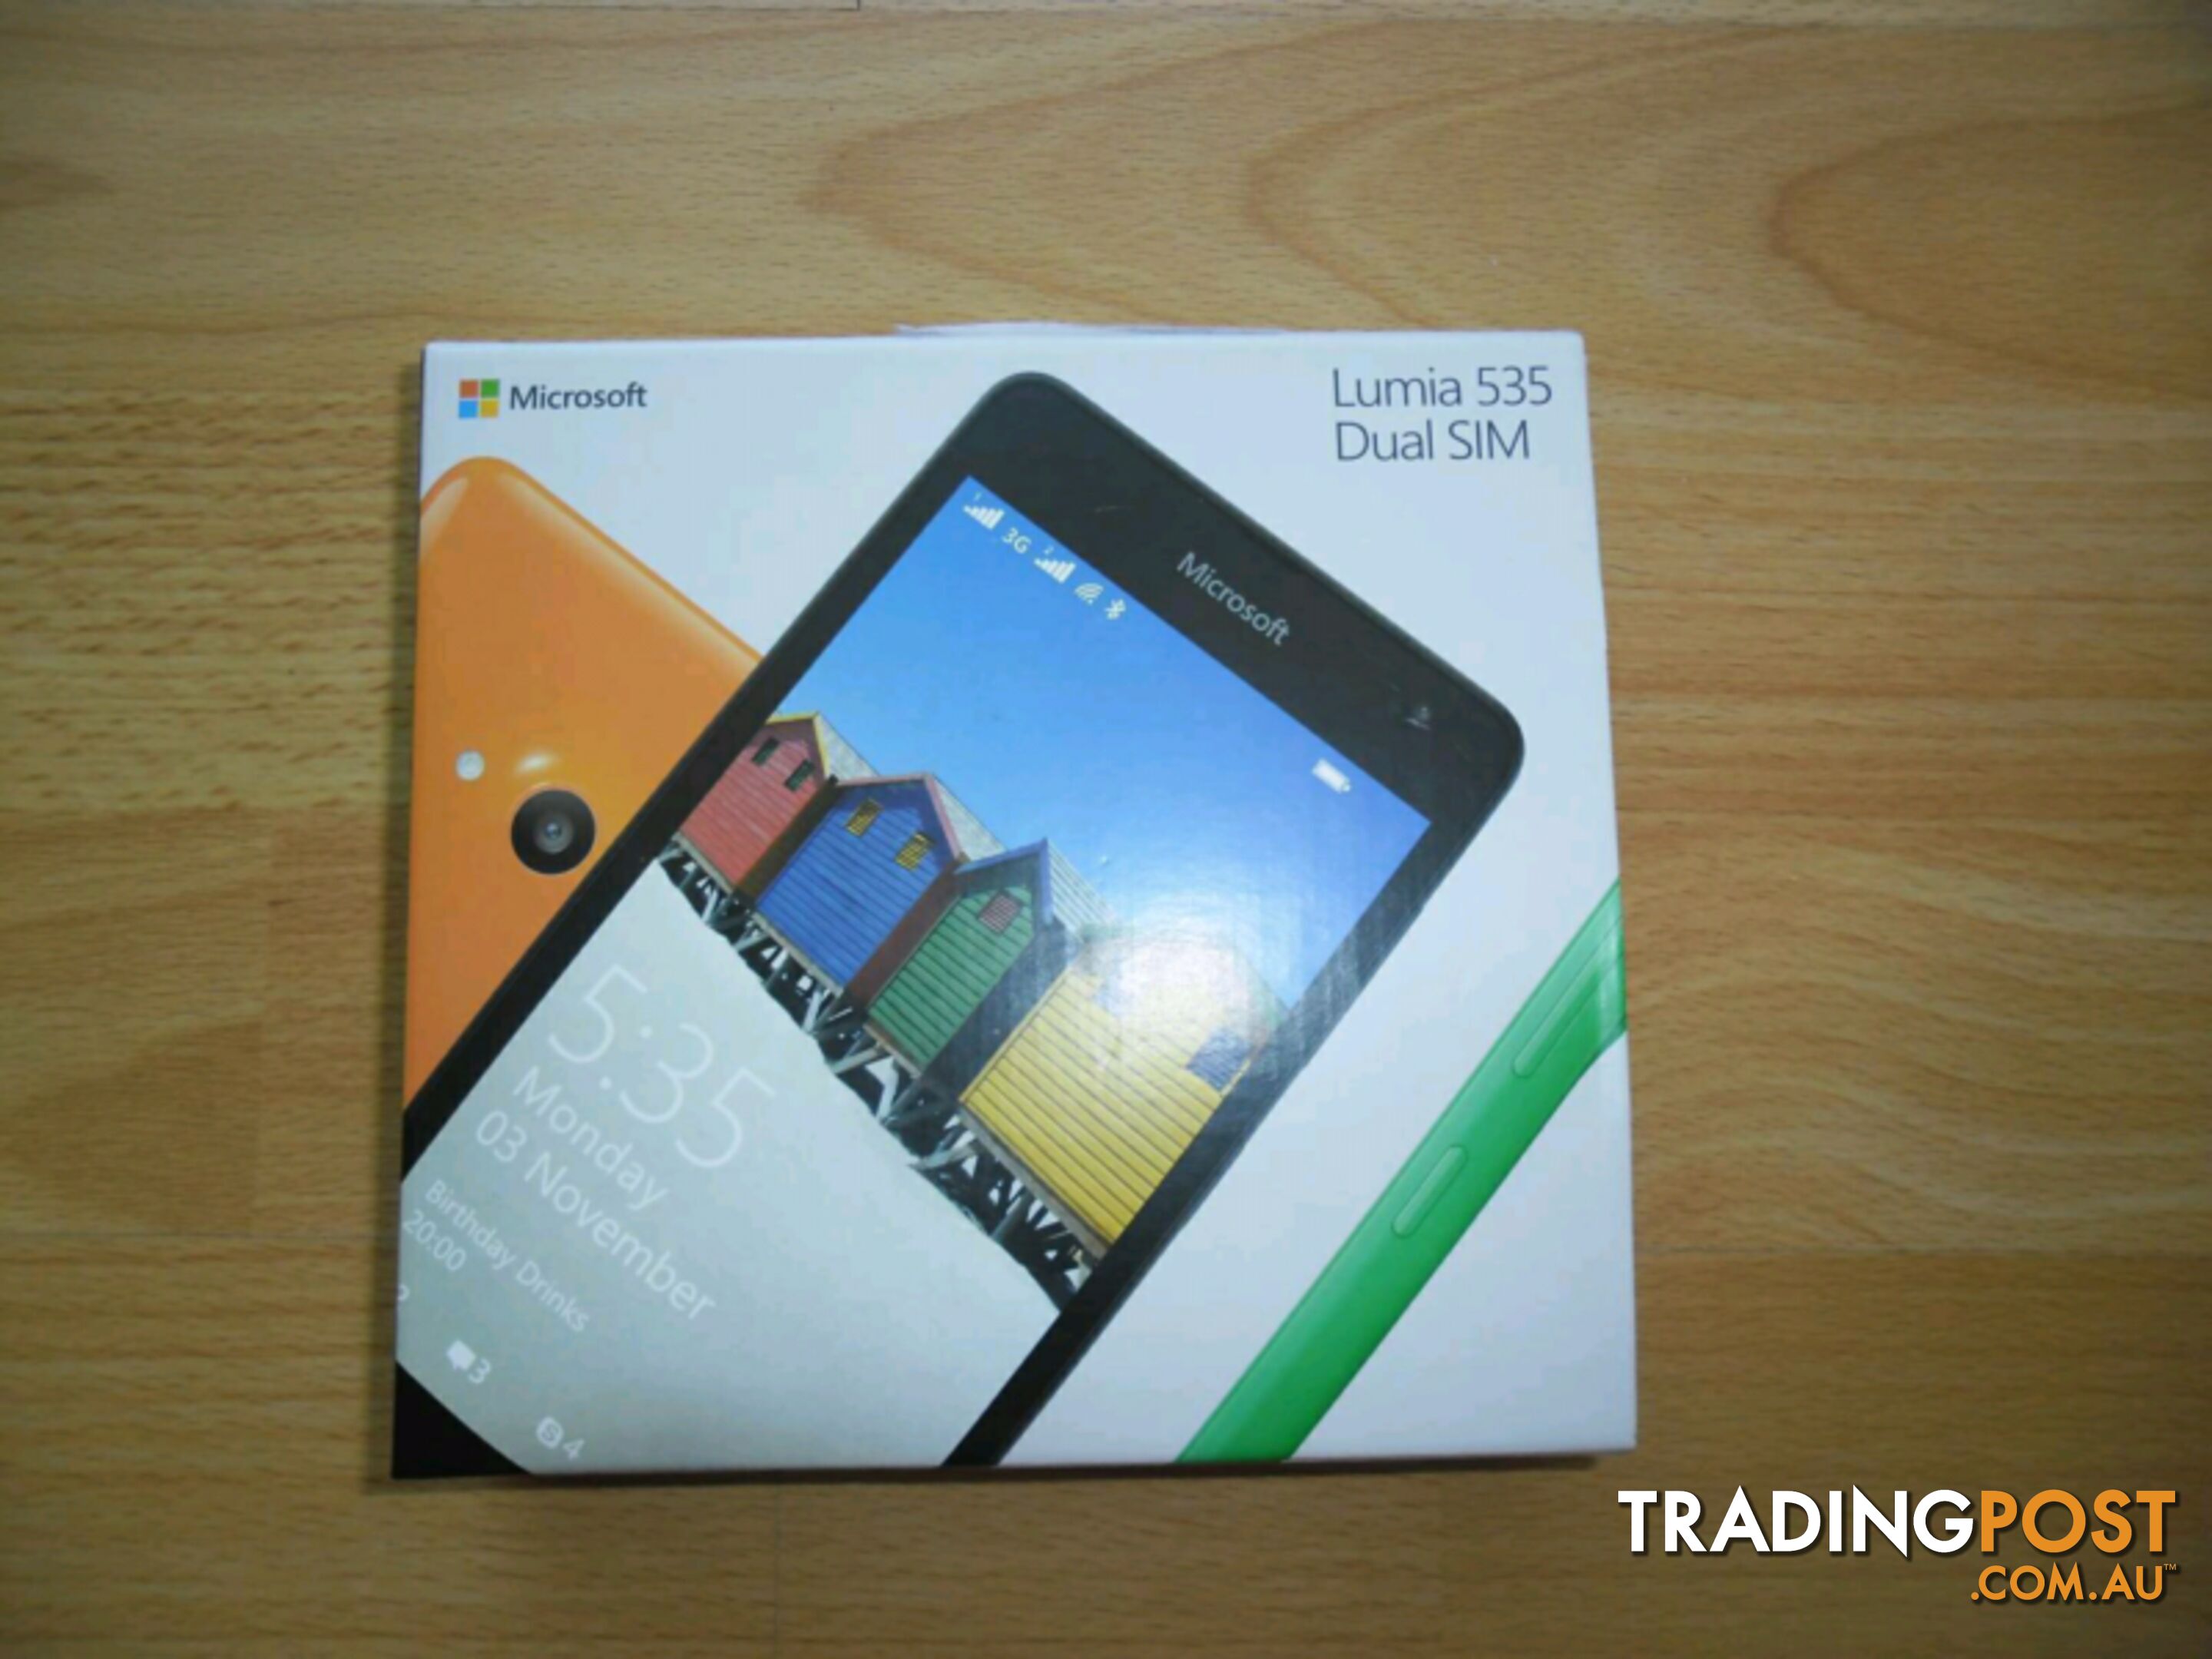 Microsoft Lumia 535 Dual SIM Windows phone 5 inch screen.